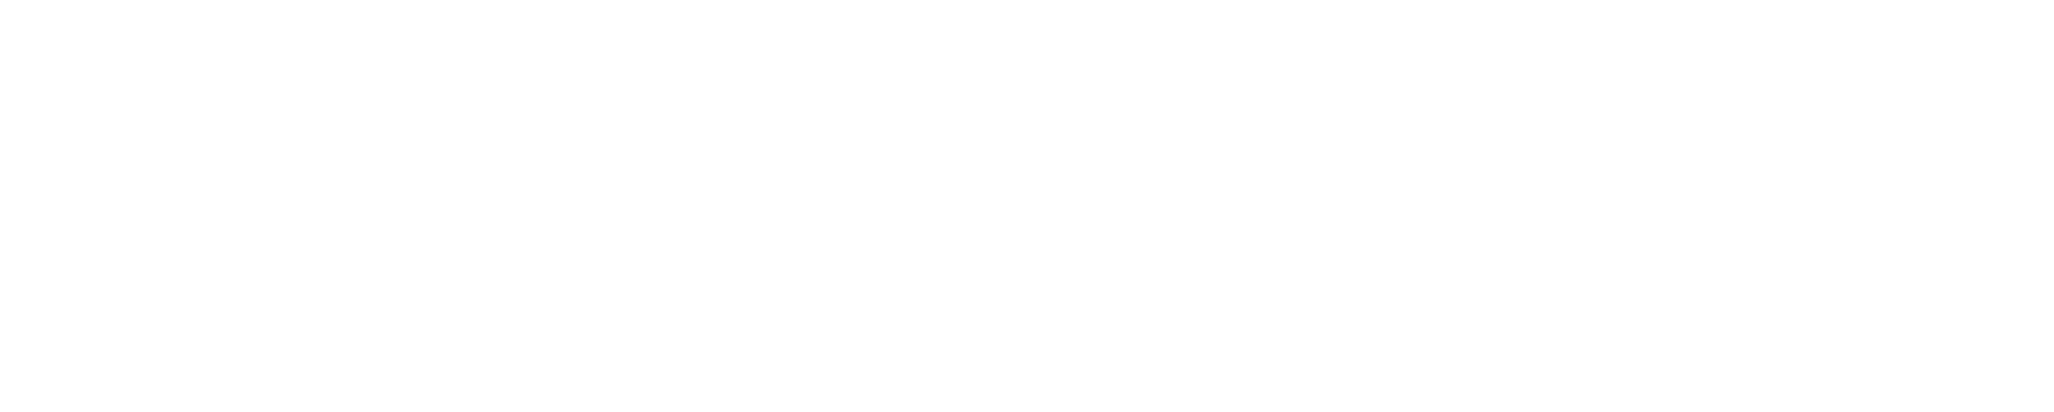 MUFG Mitsubishi UFJ Trust and Banking